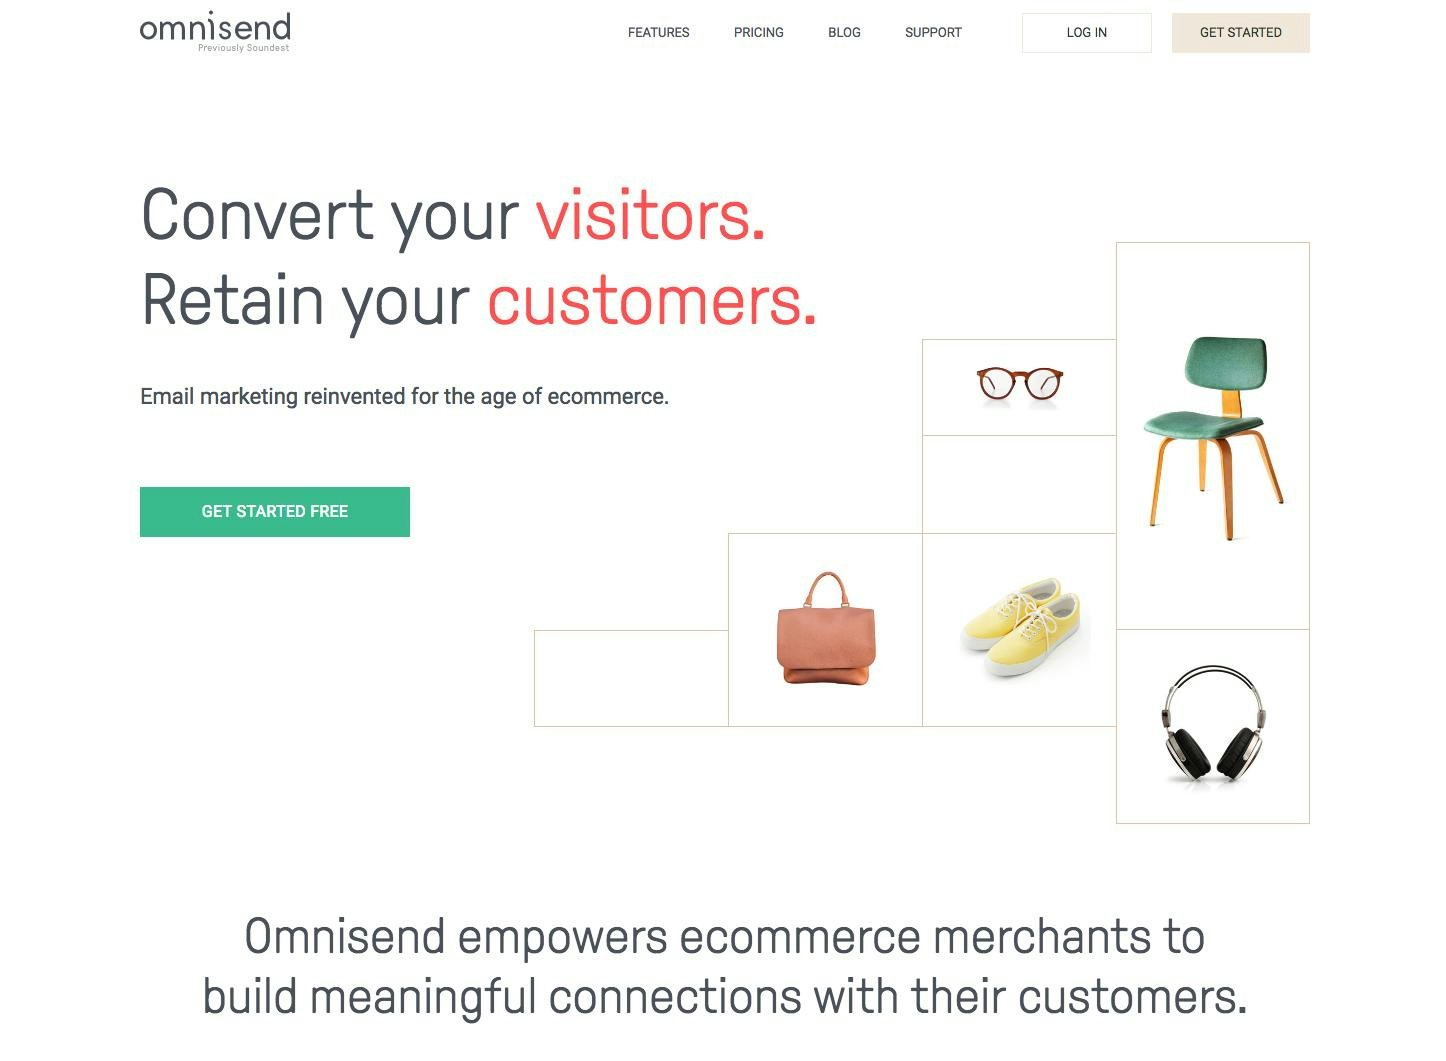 email marketing platforms: Omnisend